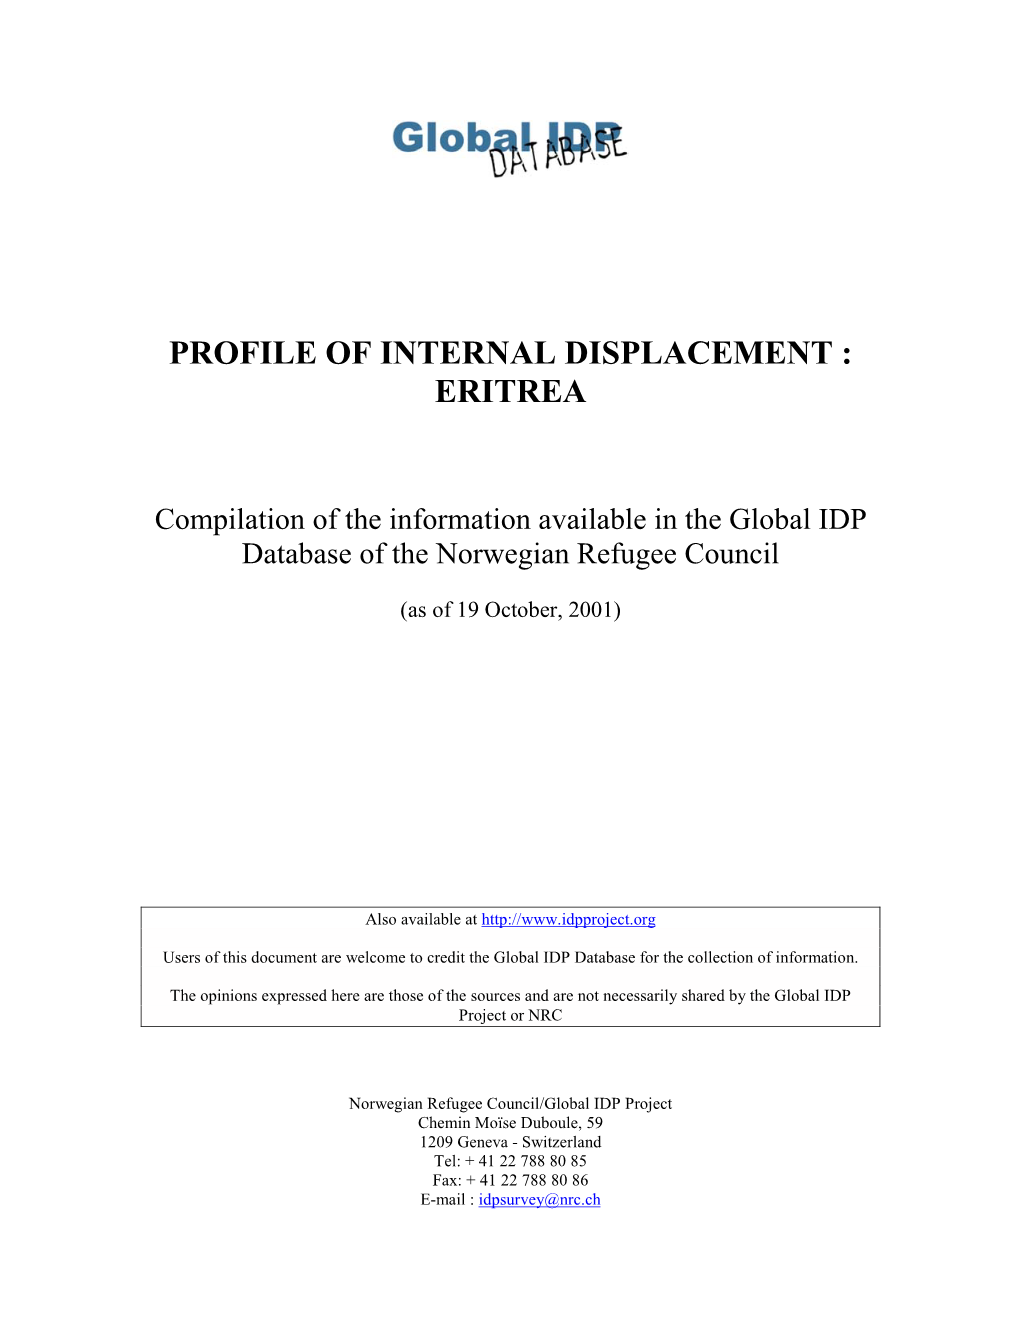 Profile of Internal Displacement : Eritrea